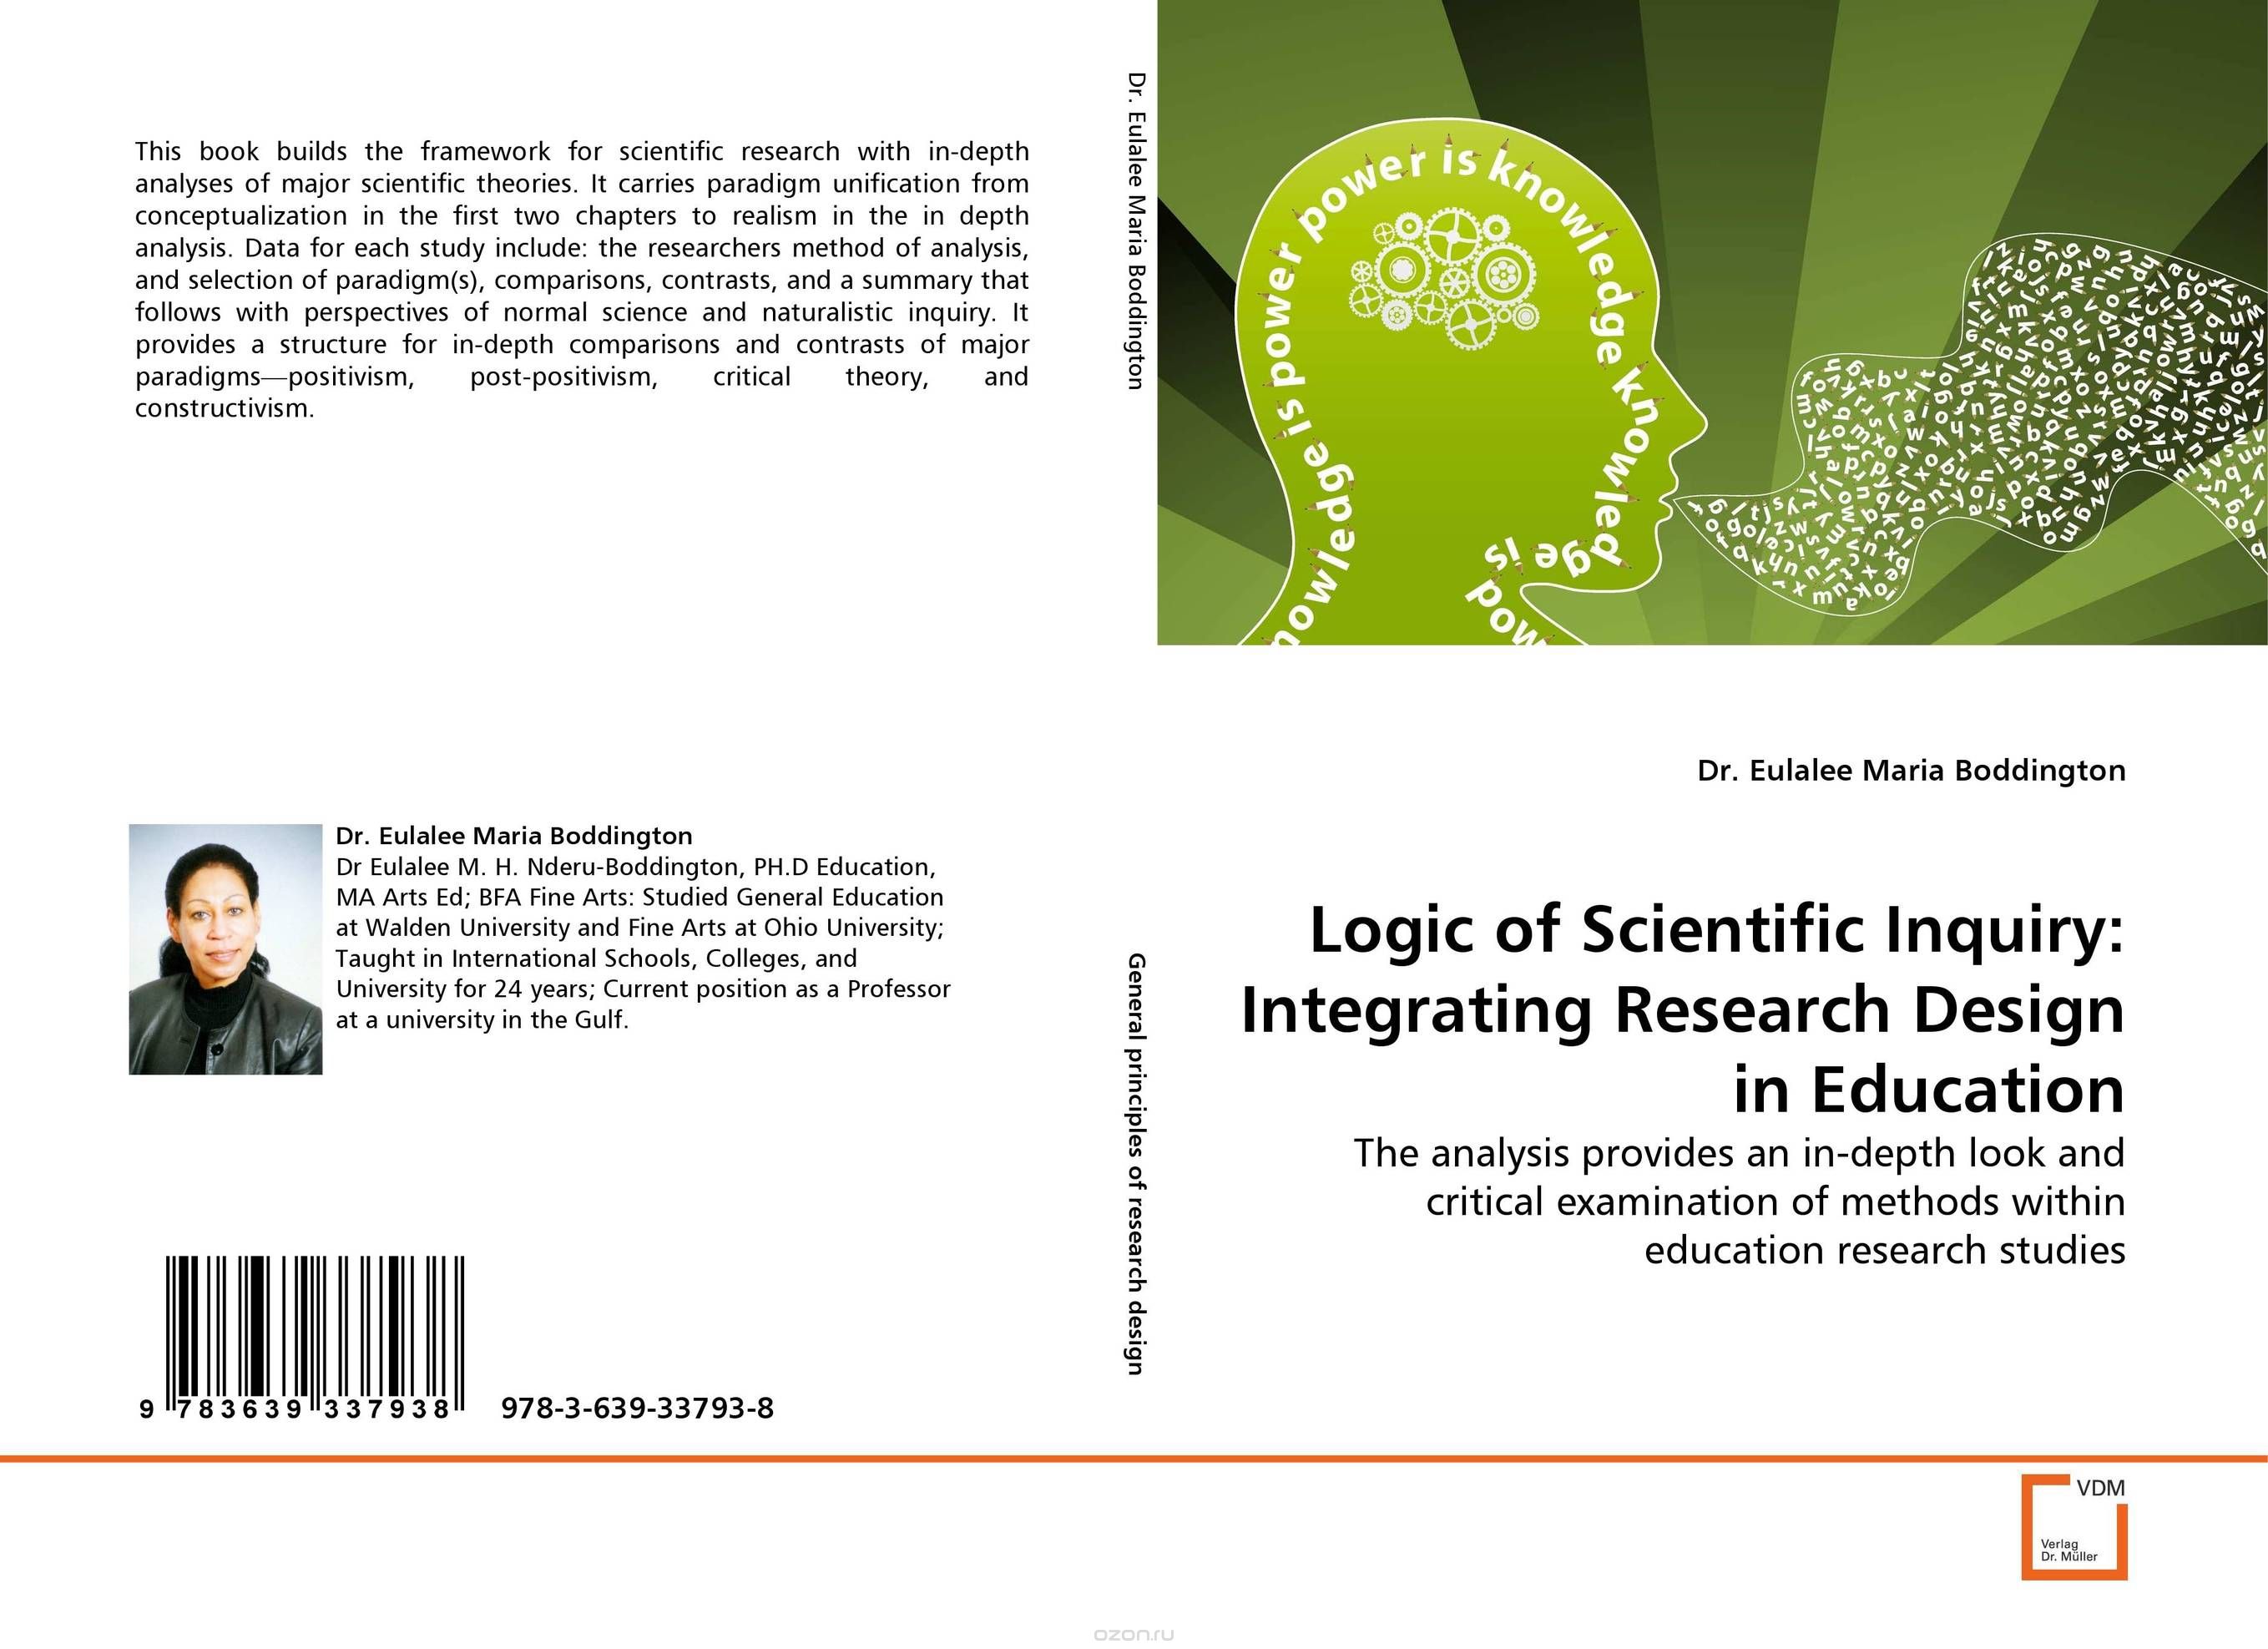 Скачать книгу "Logic of Scientific Inquiry: Integrating Research Design in Education"